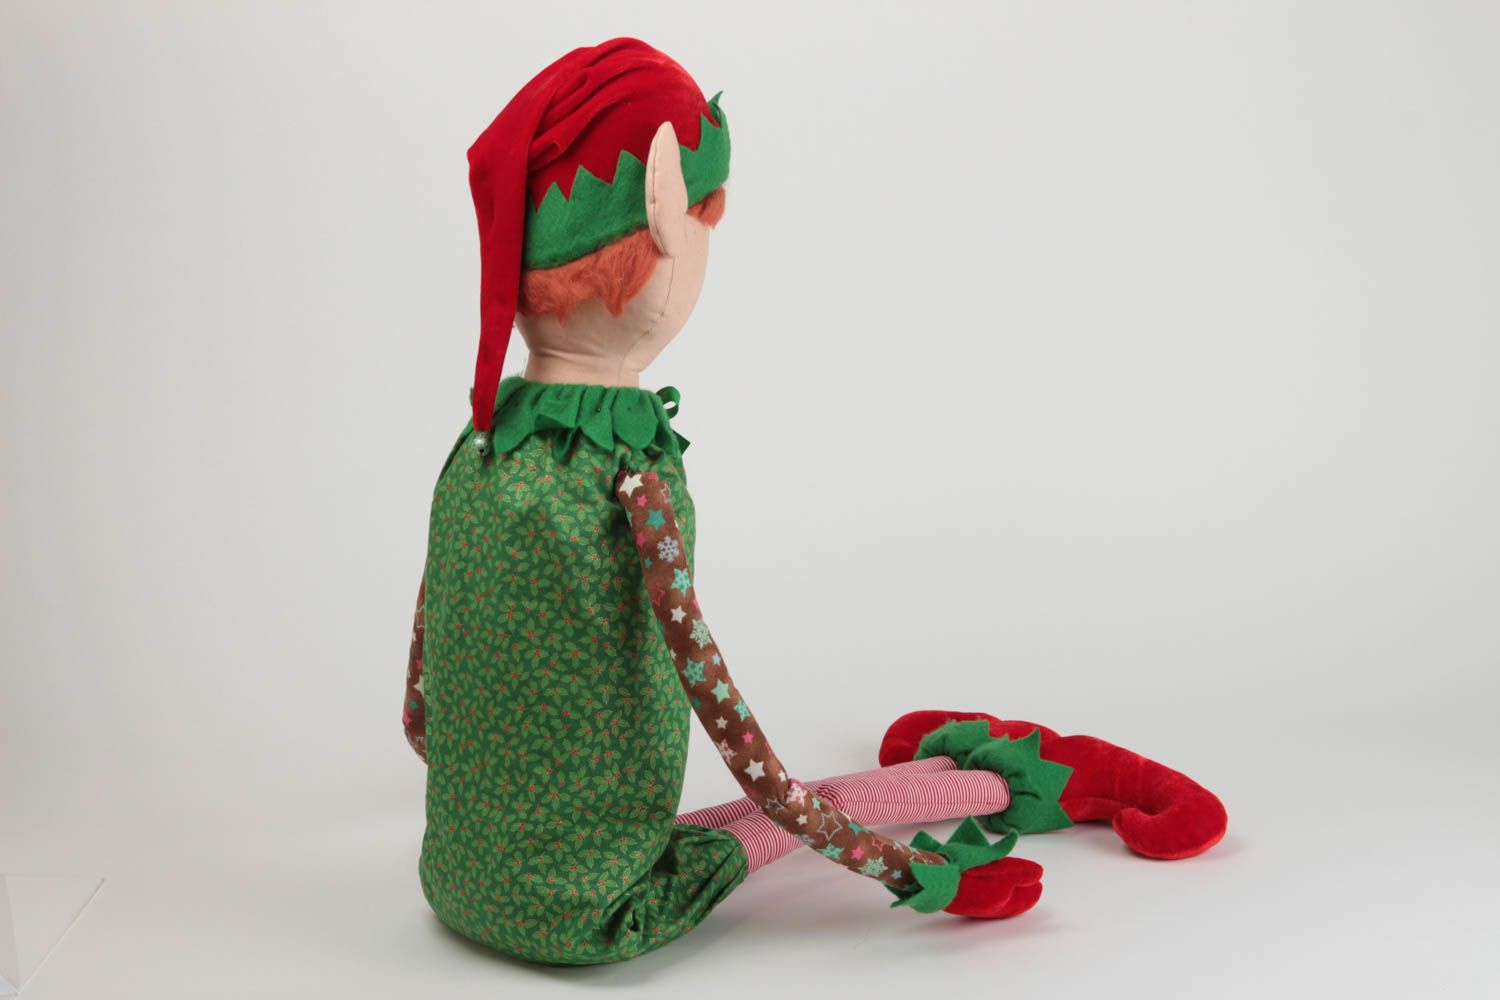 Handmade soft toy interior rag doll interior decorating gift ideas for kids photo 3